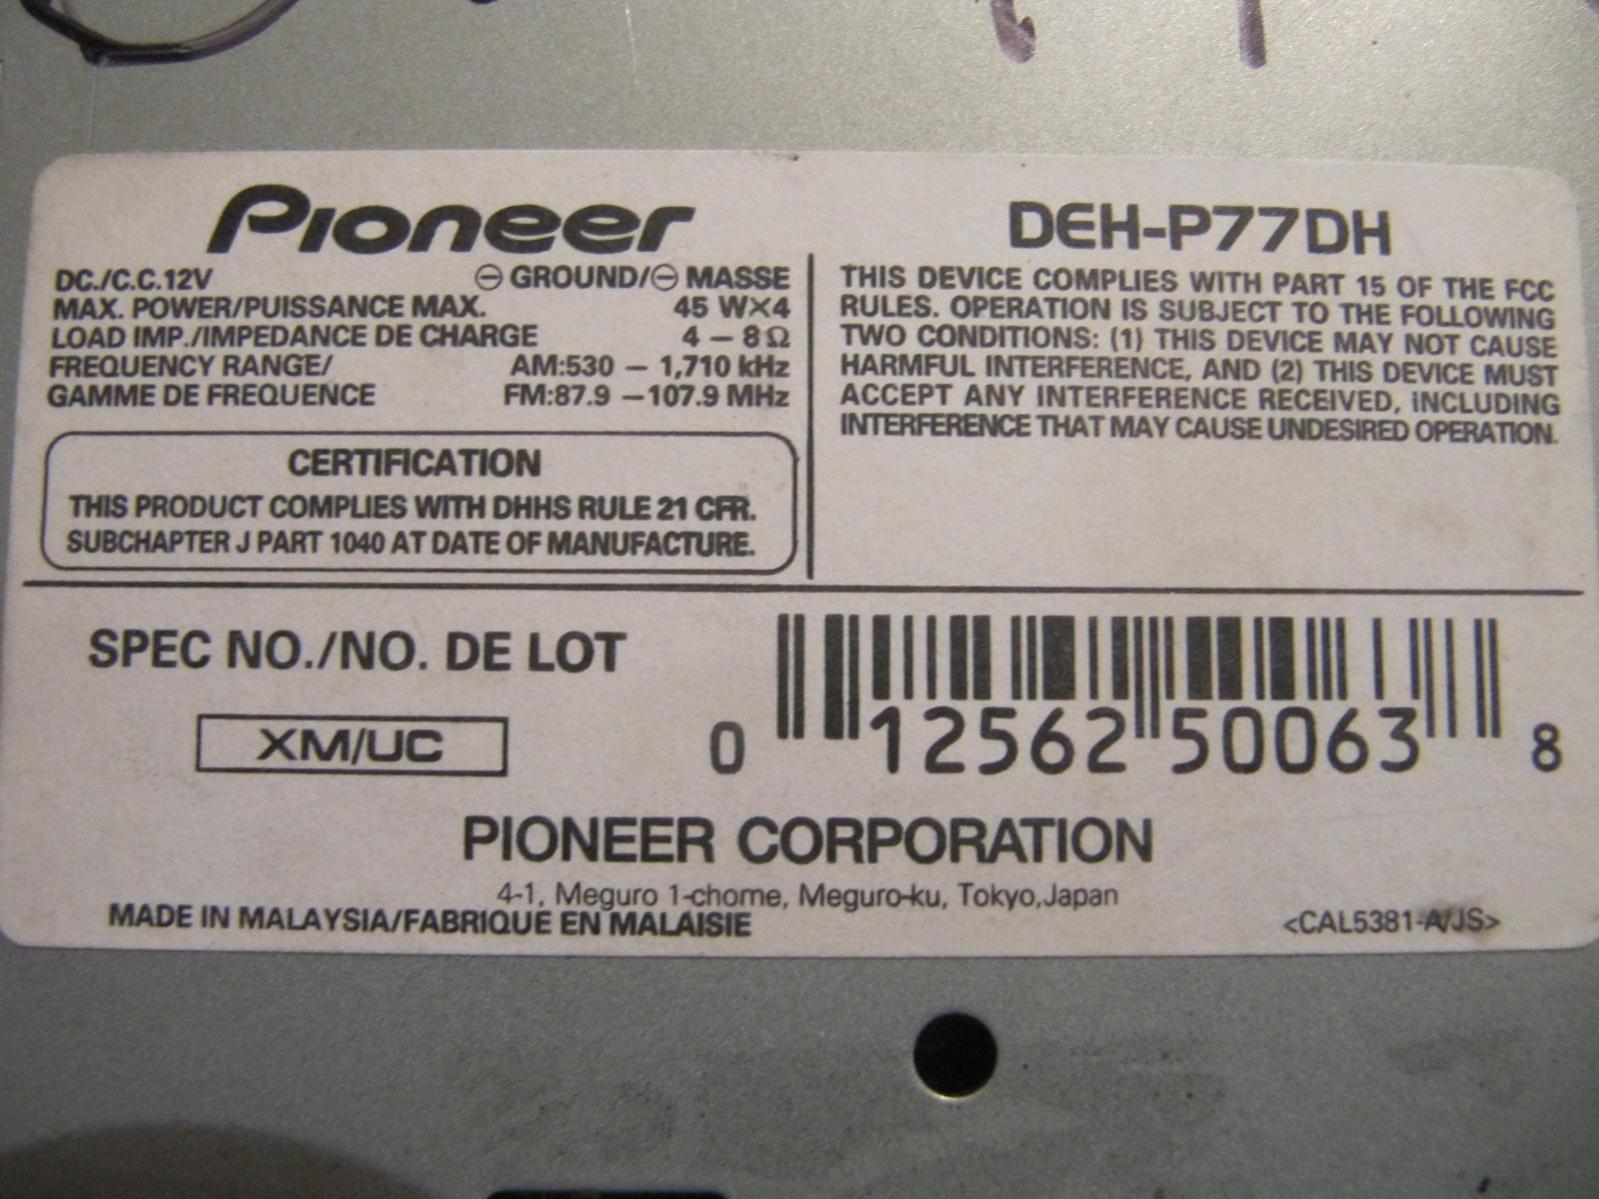 Pioneer Deh-p77dh 1 5 Din - Ls1tech